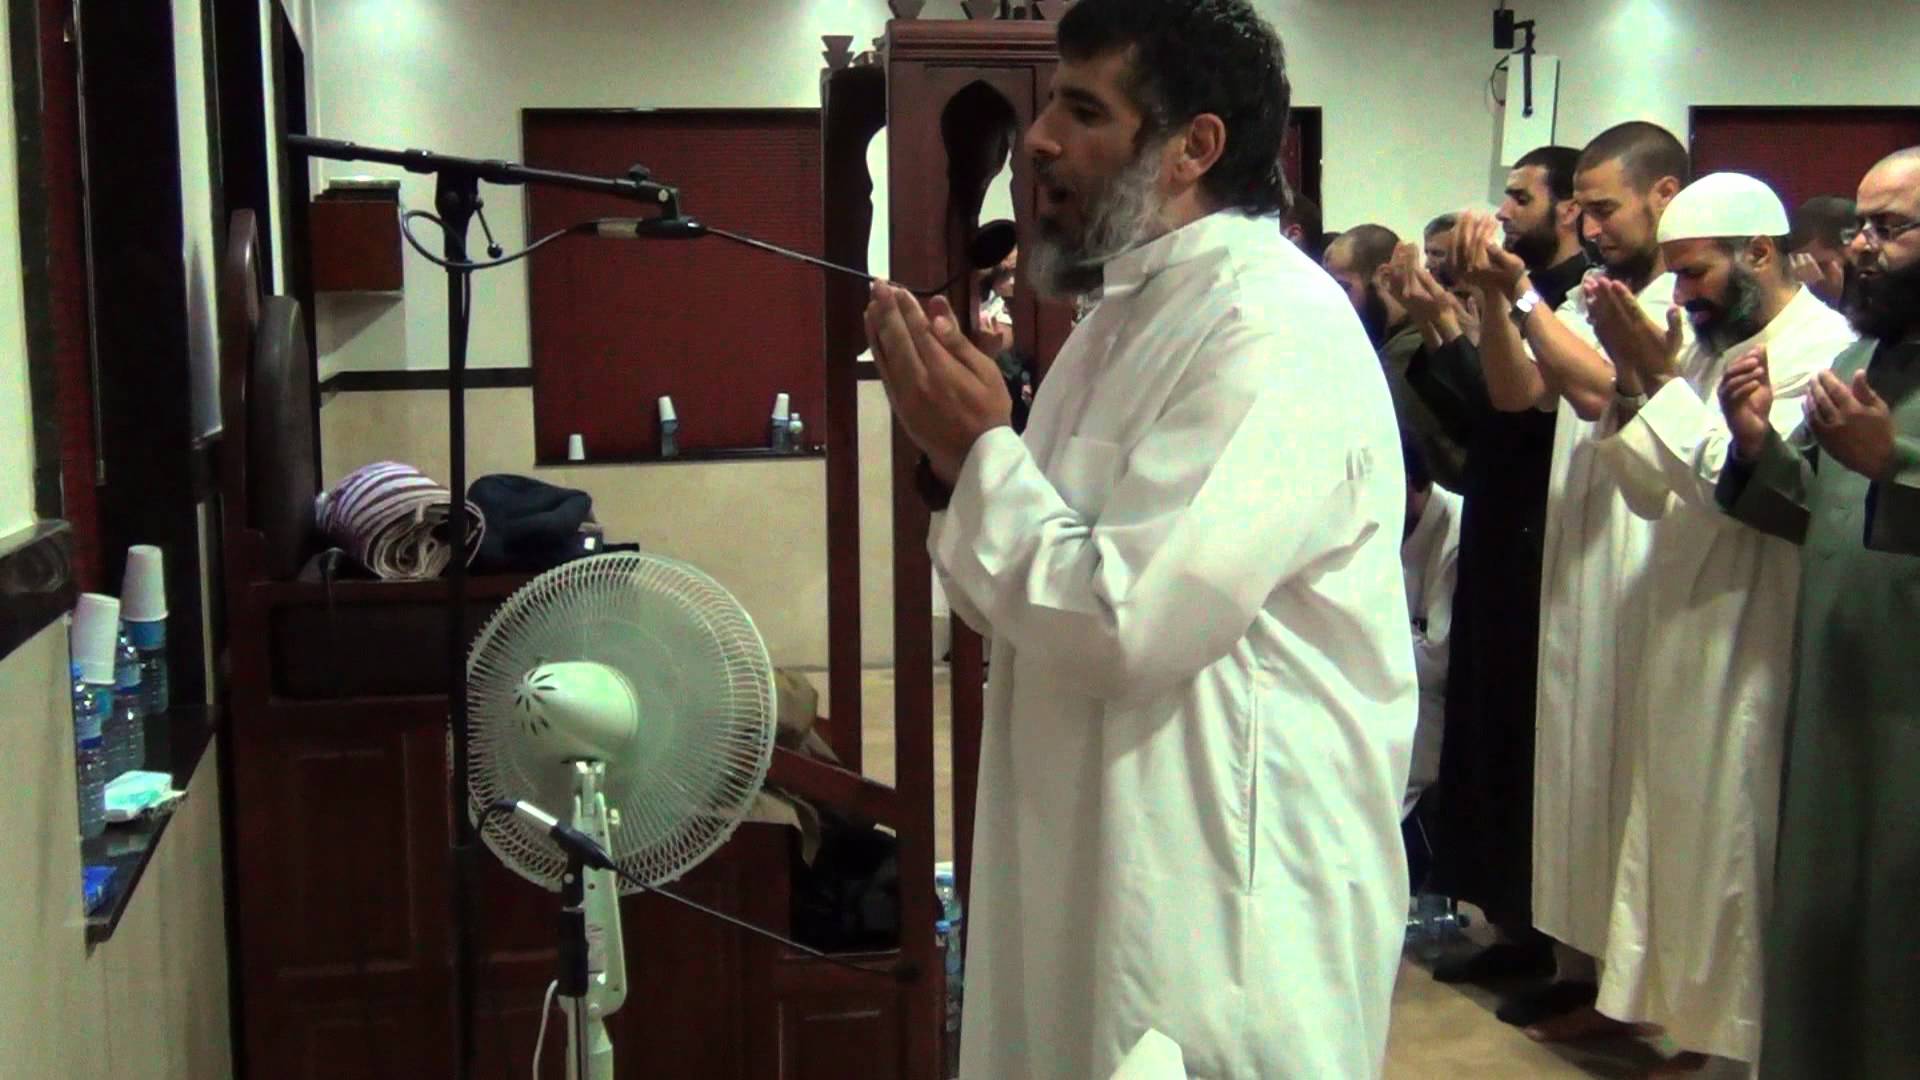 supplication during prayer